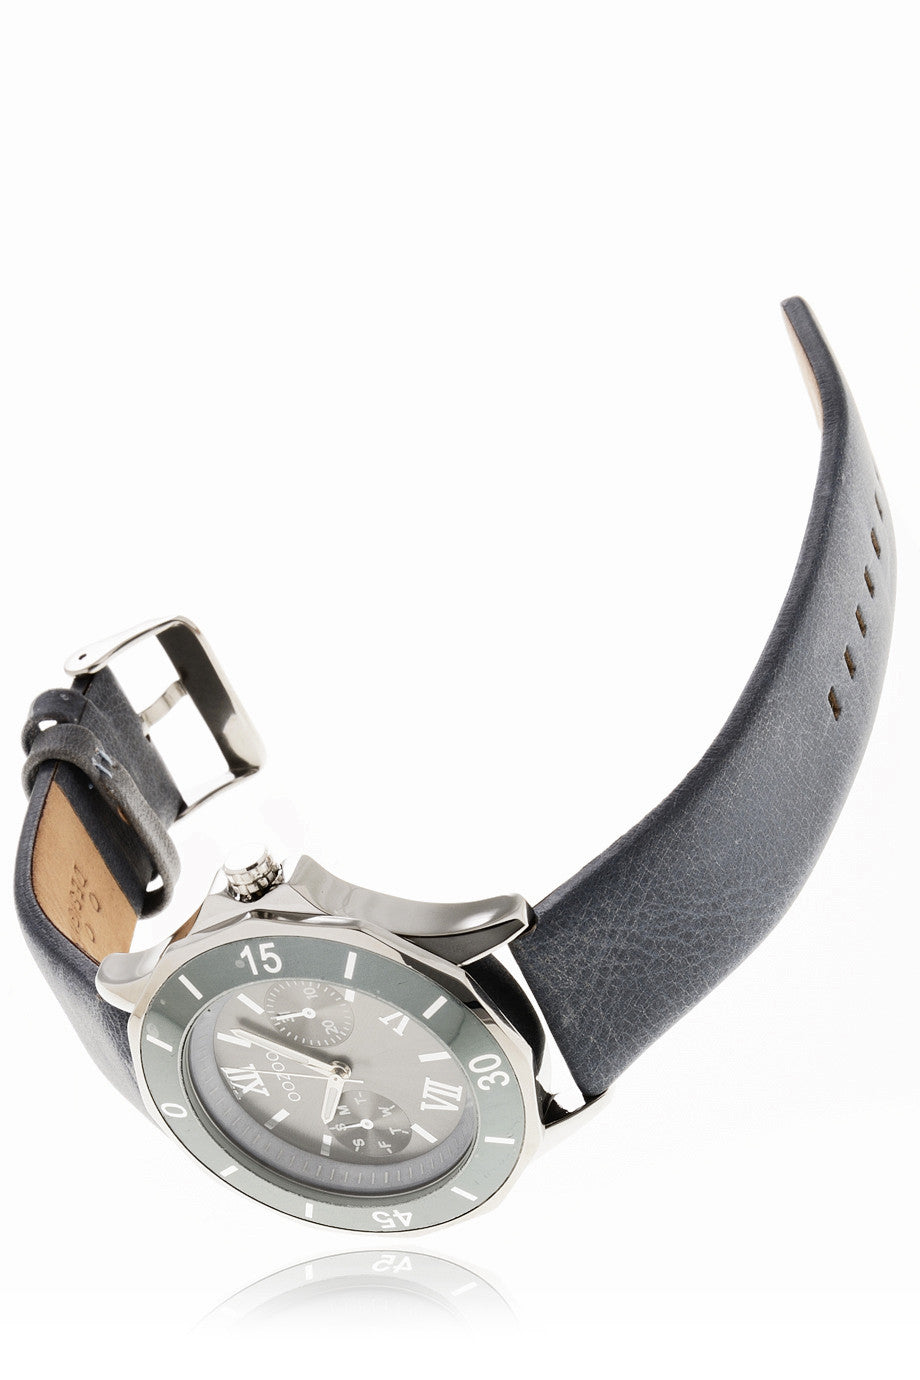 OOZOO C5317 blauwgrijs horloge